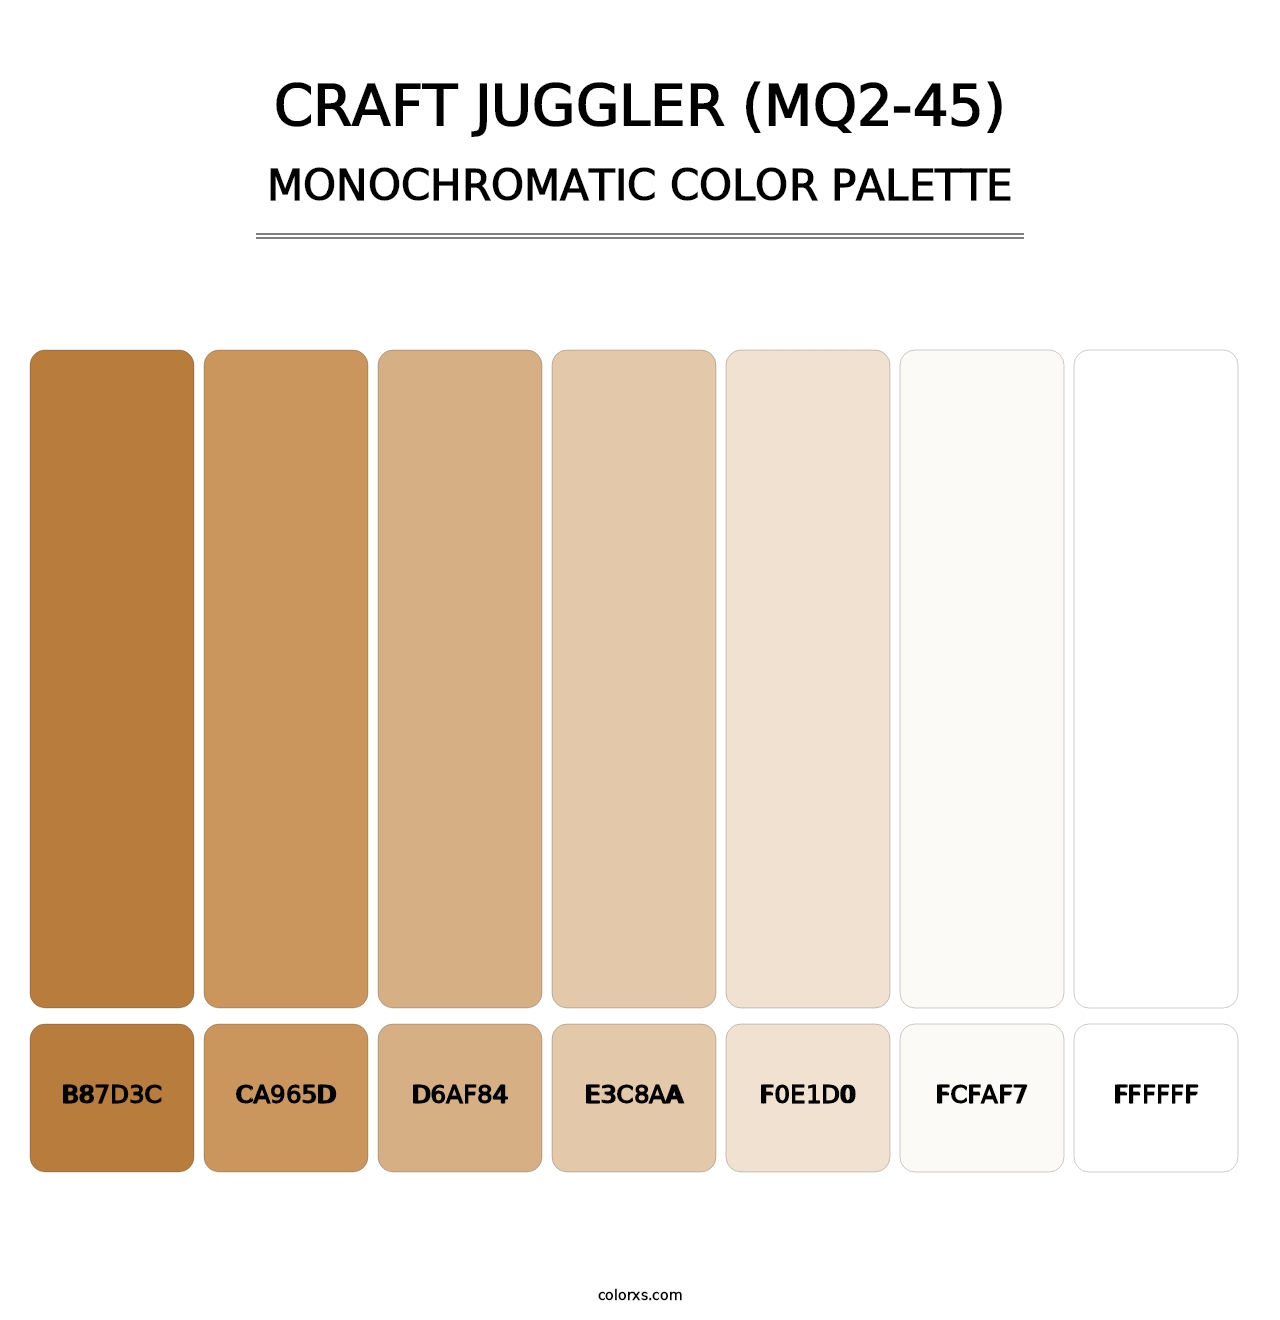 Craft Juggler (MQ2-45) - Monochromatic Color Palette